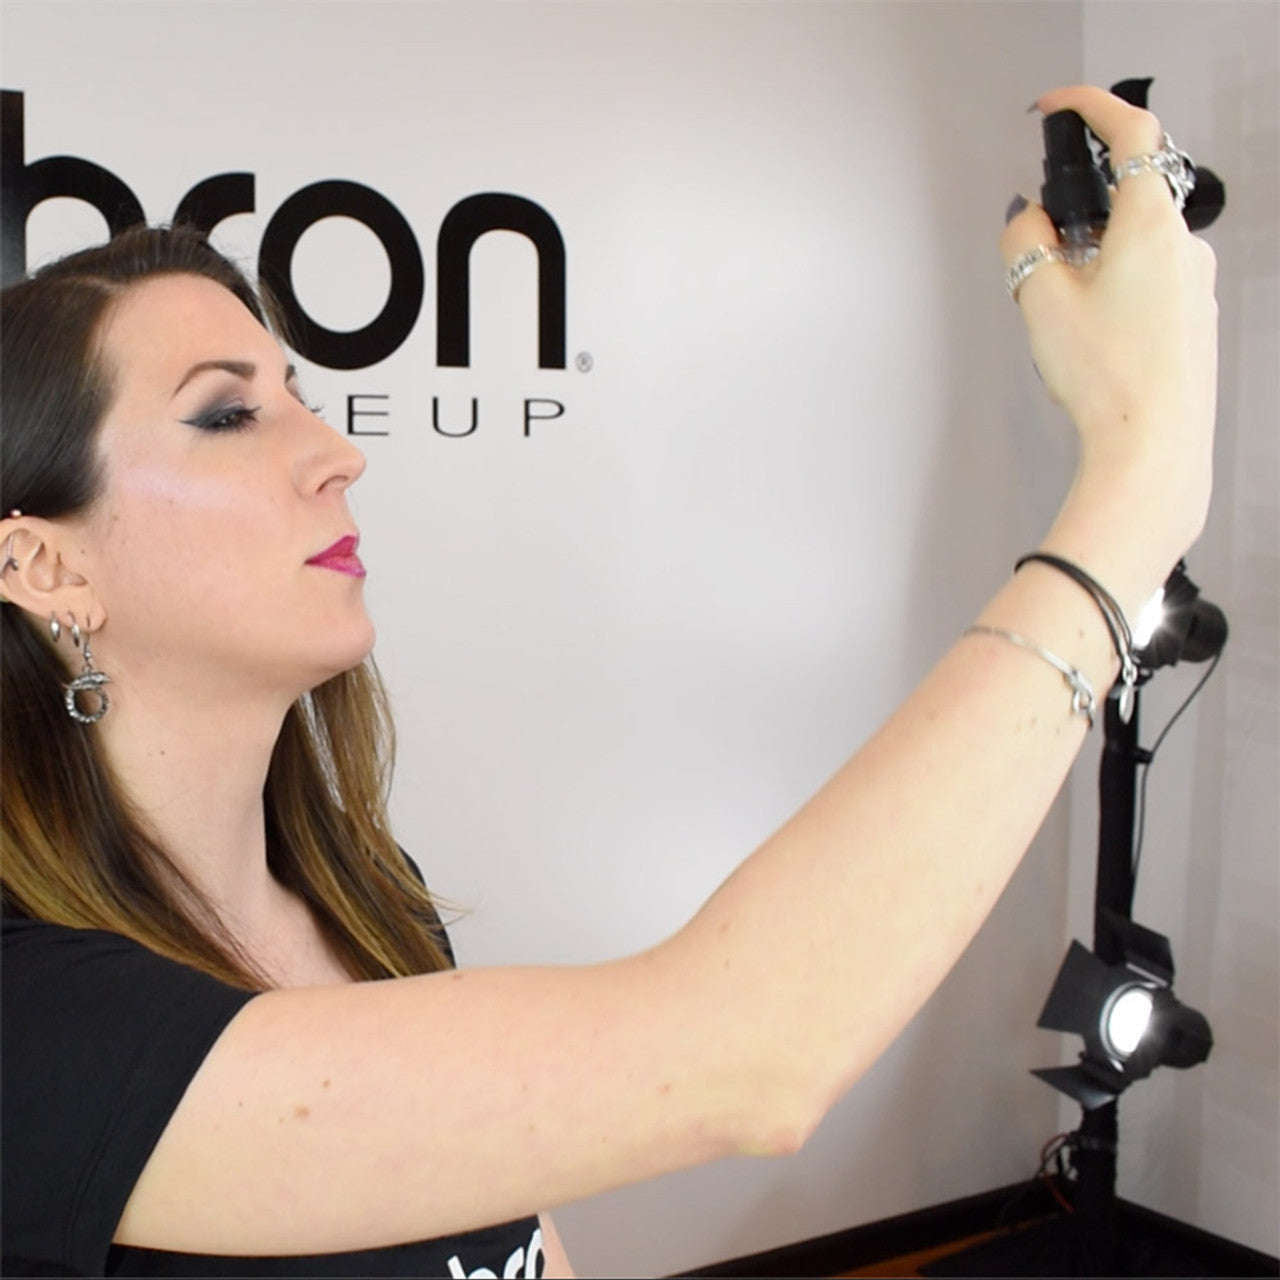 Mehron Barrier Makeup Setting Spray